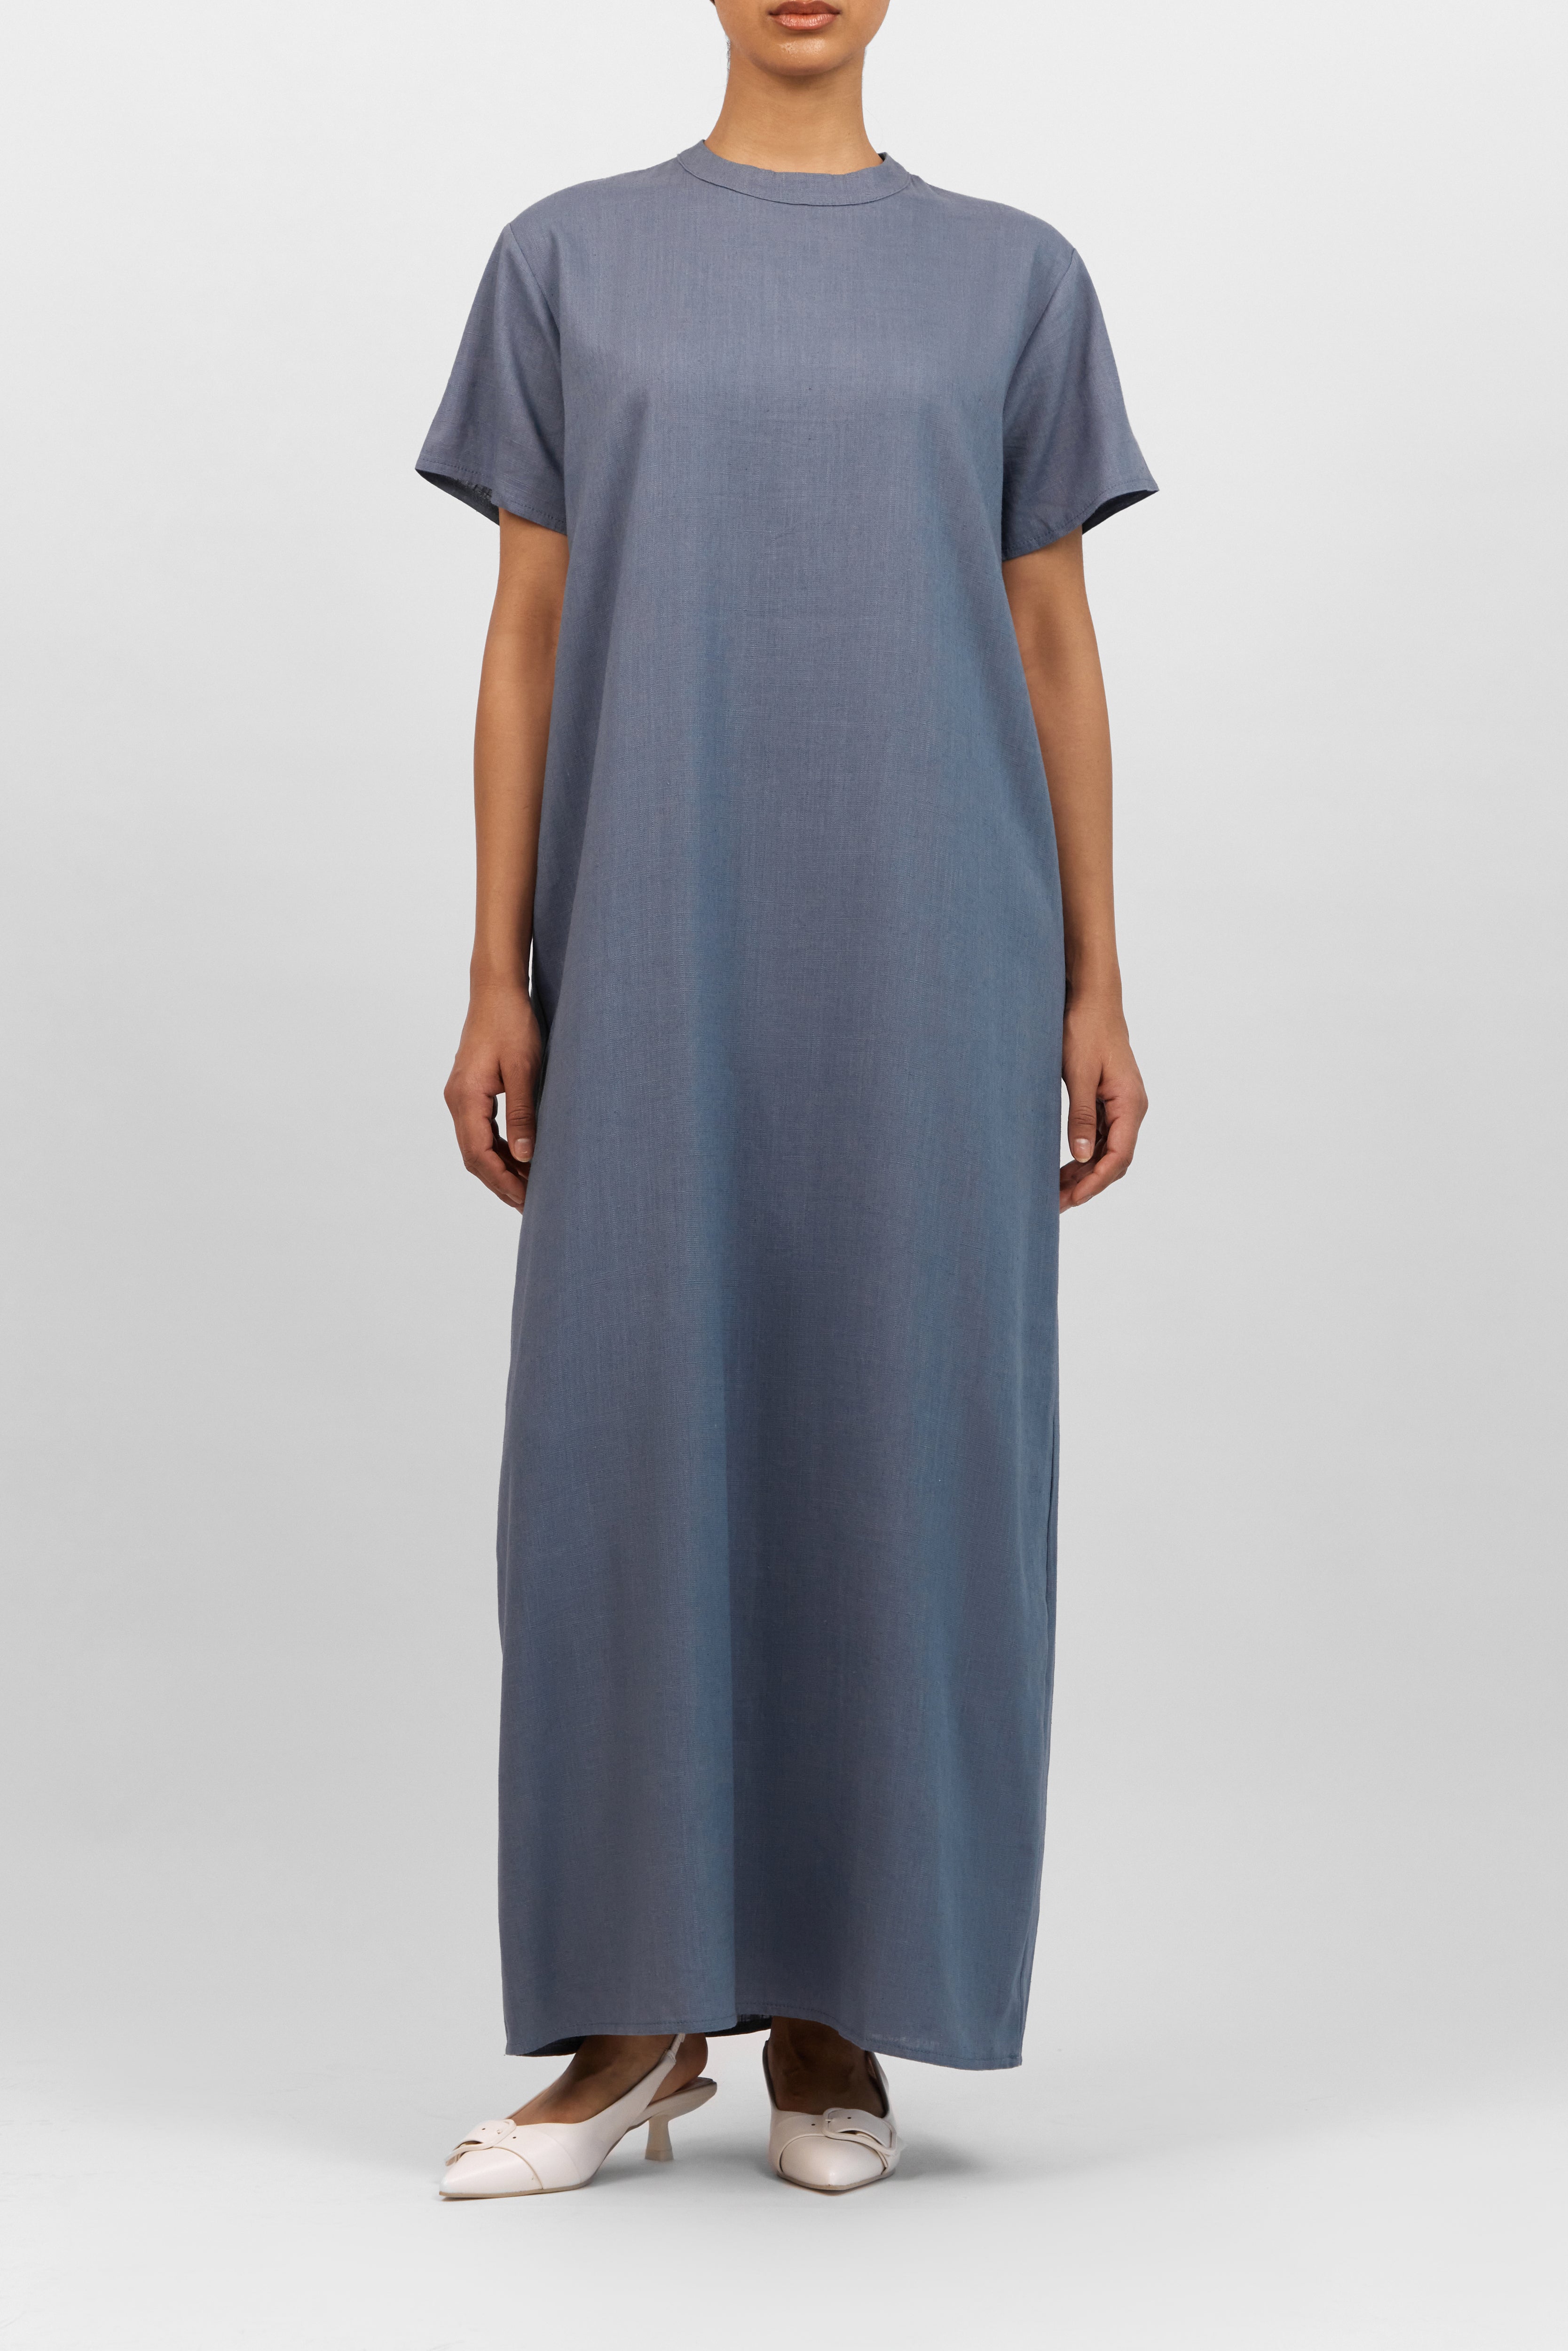 US - Linen Blend Abaya Set - Denim